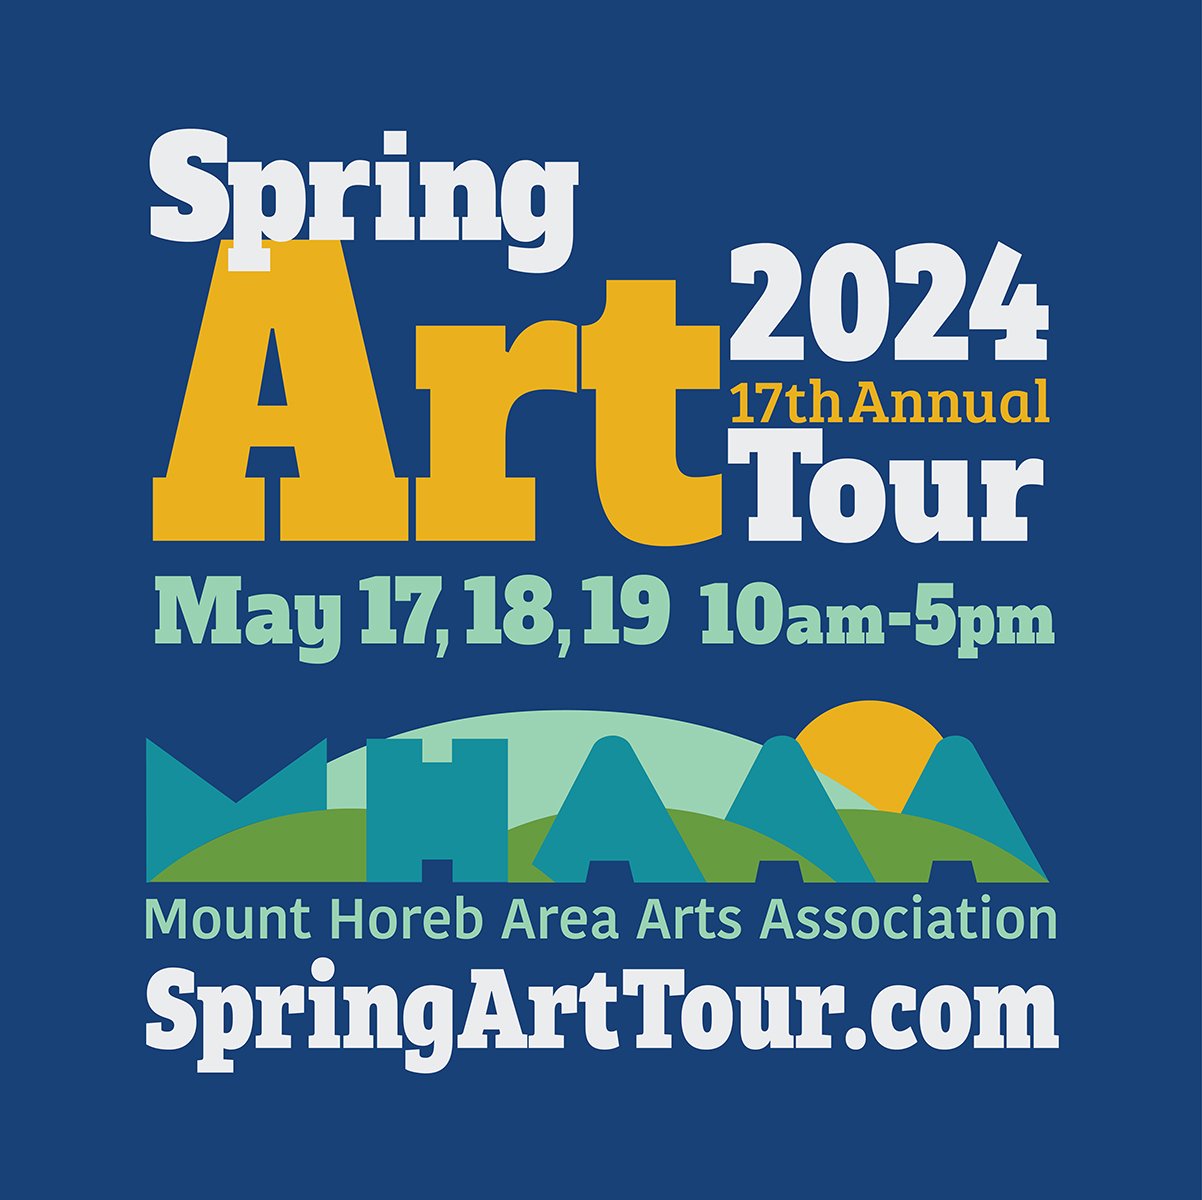 Spring Art Tour is right around the corner! Meet Christy Nesja and Jane Nass at tour stop No. 8. Tour details at SpringArtTour.com
#mounthorebwi #mounthorebarts #wisconsinletterpress